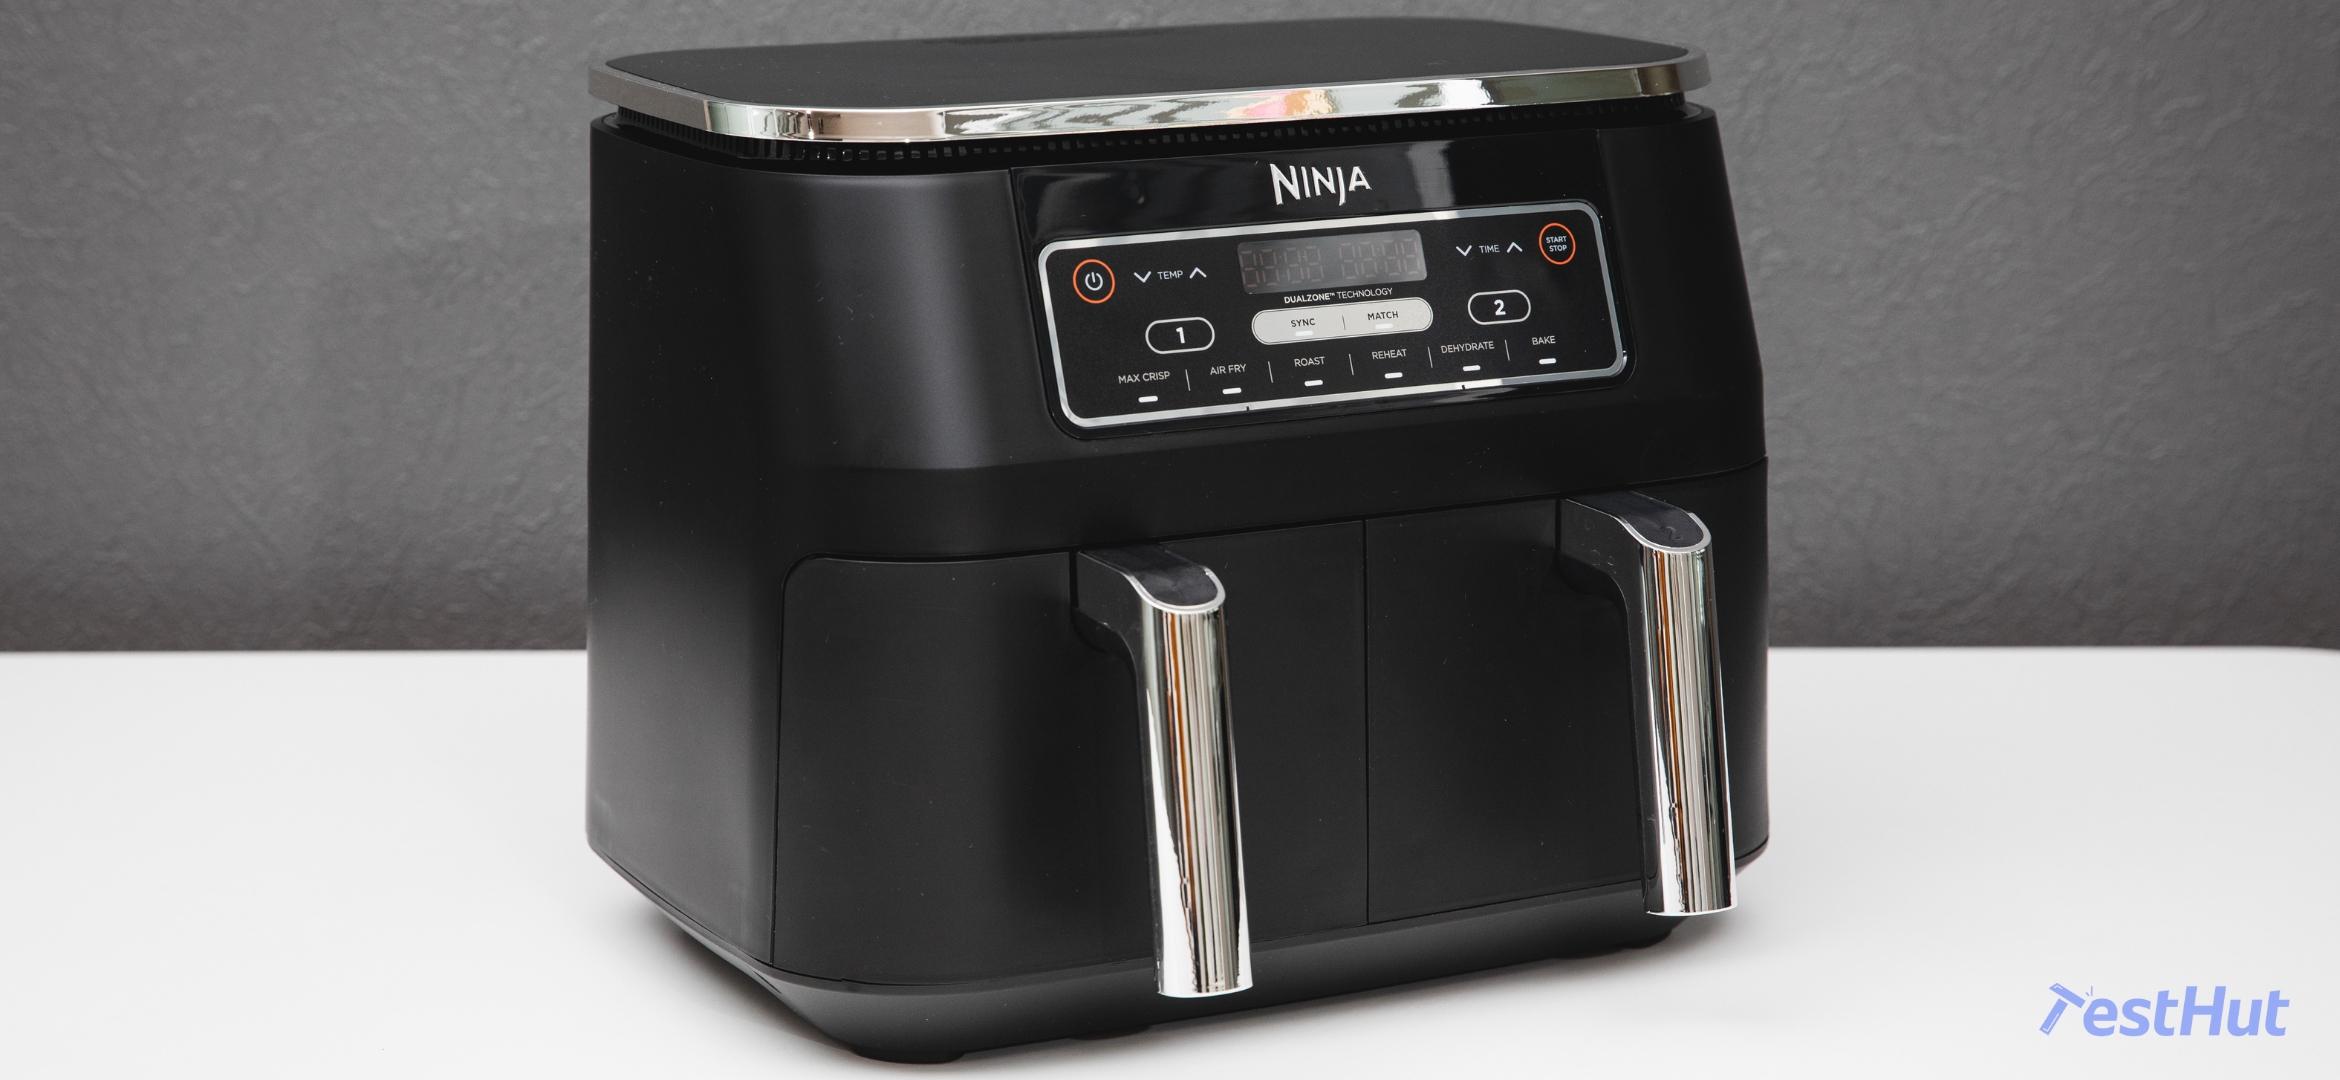 Ninja Foodi Dual Zone Air Fryer review: an unbeatable fryer